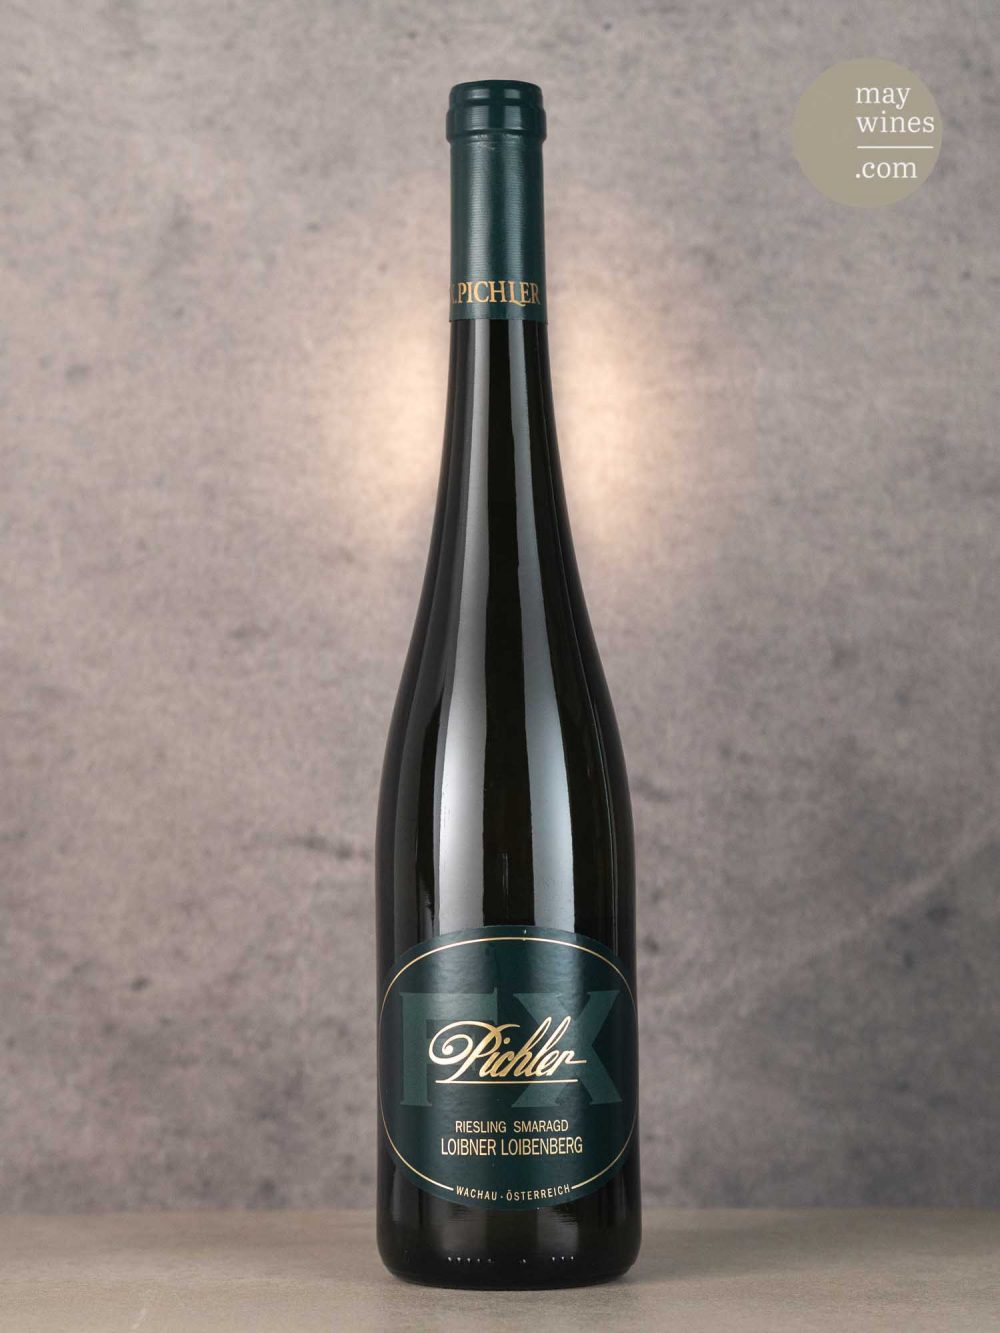 May Wines – Weißwein – 2013 Loibenberg Riesling Smaragd - Weingut FX Pichler